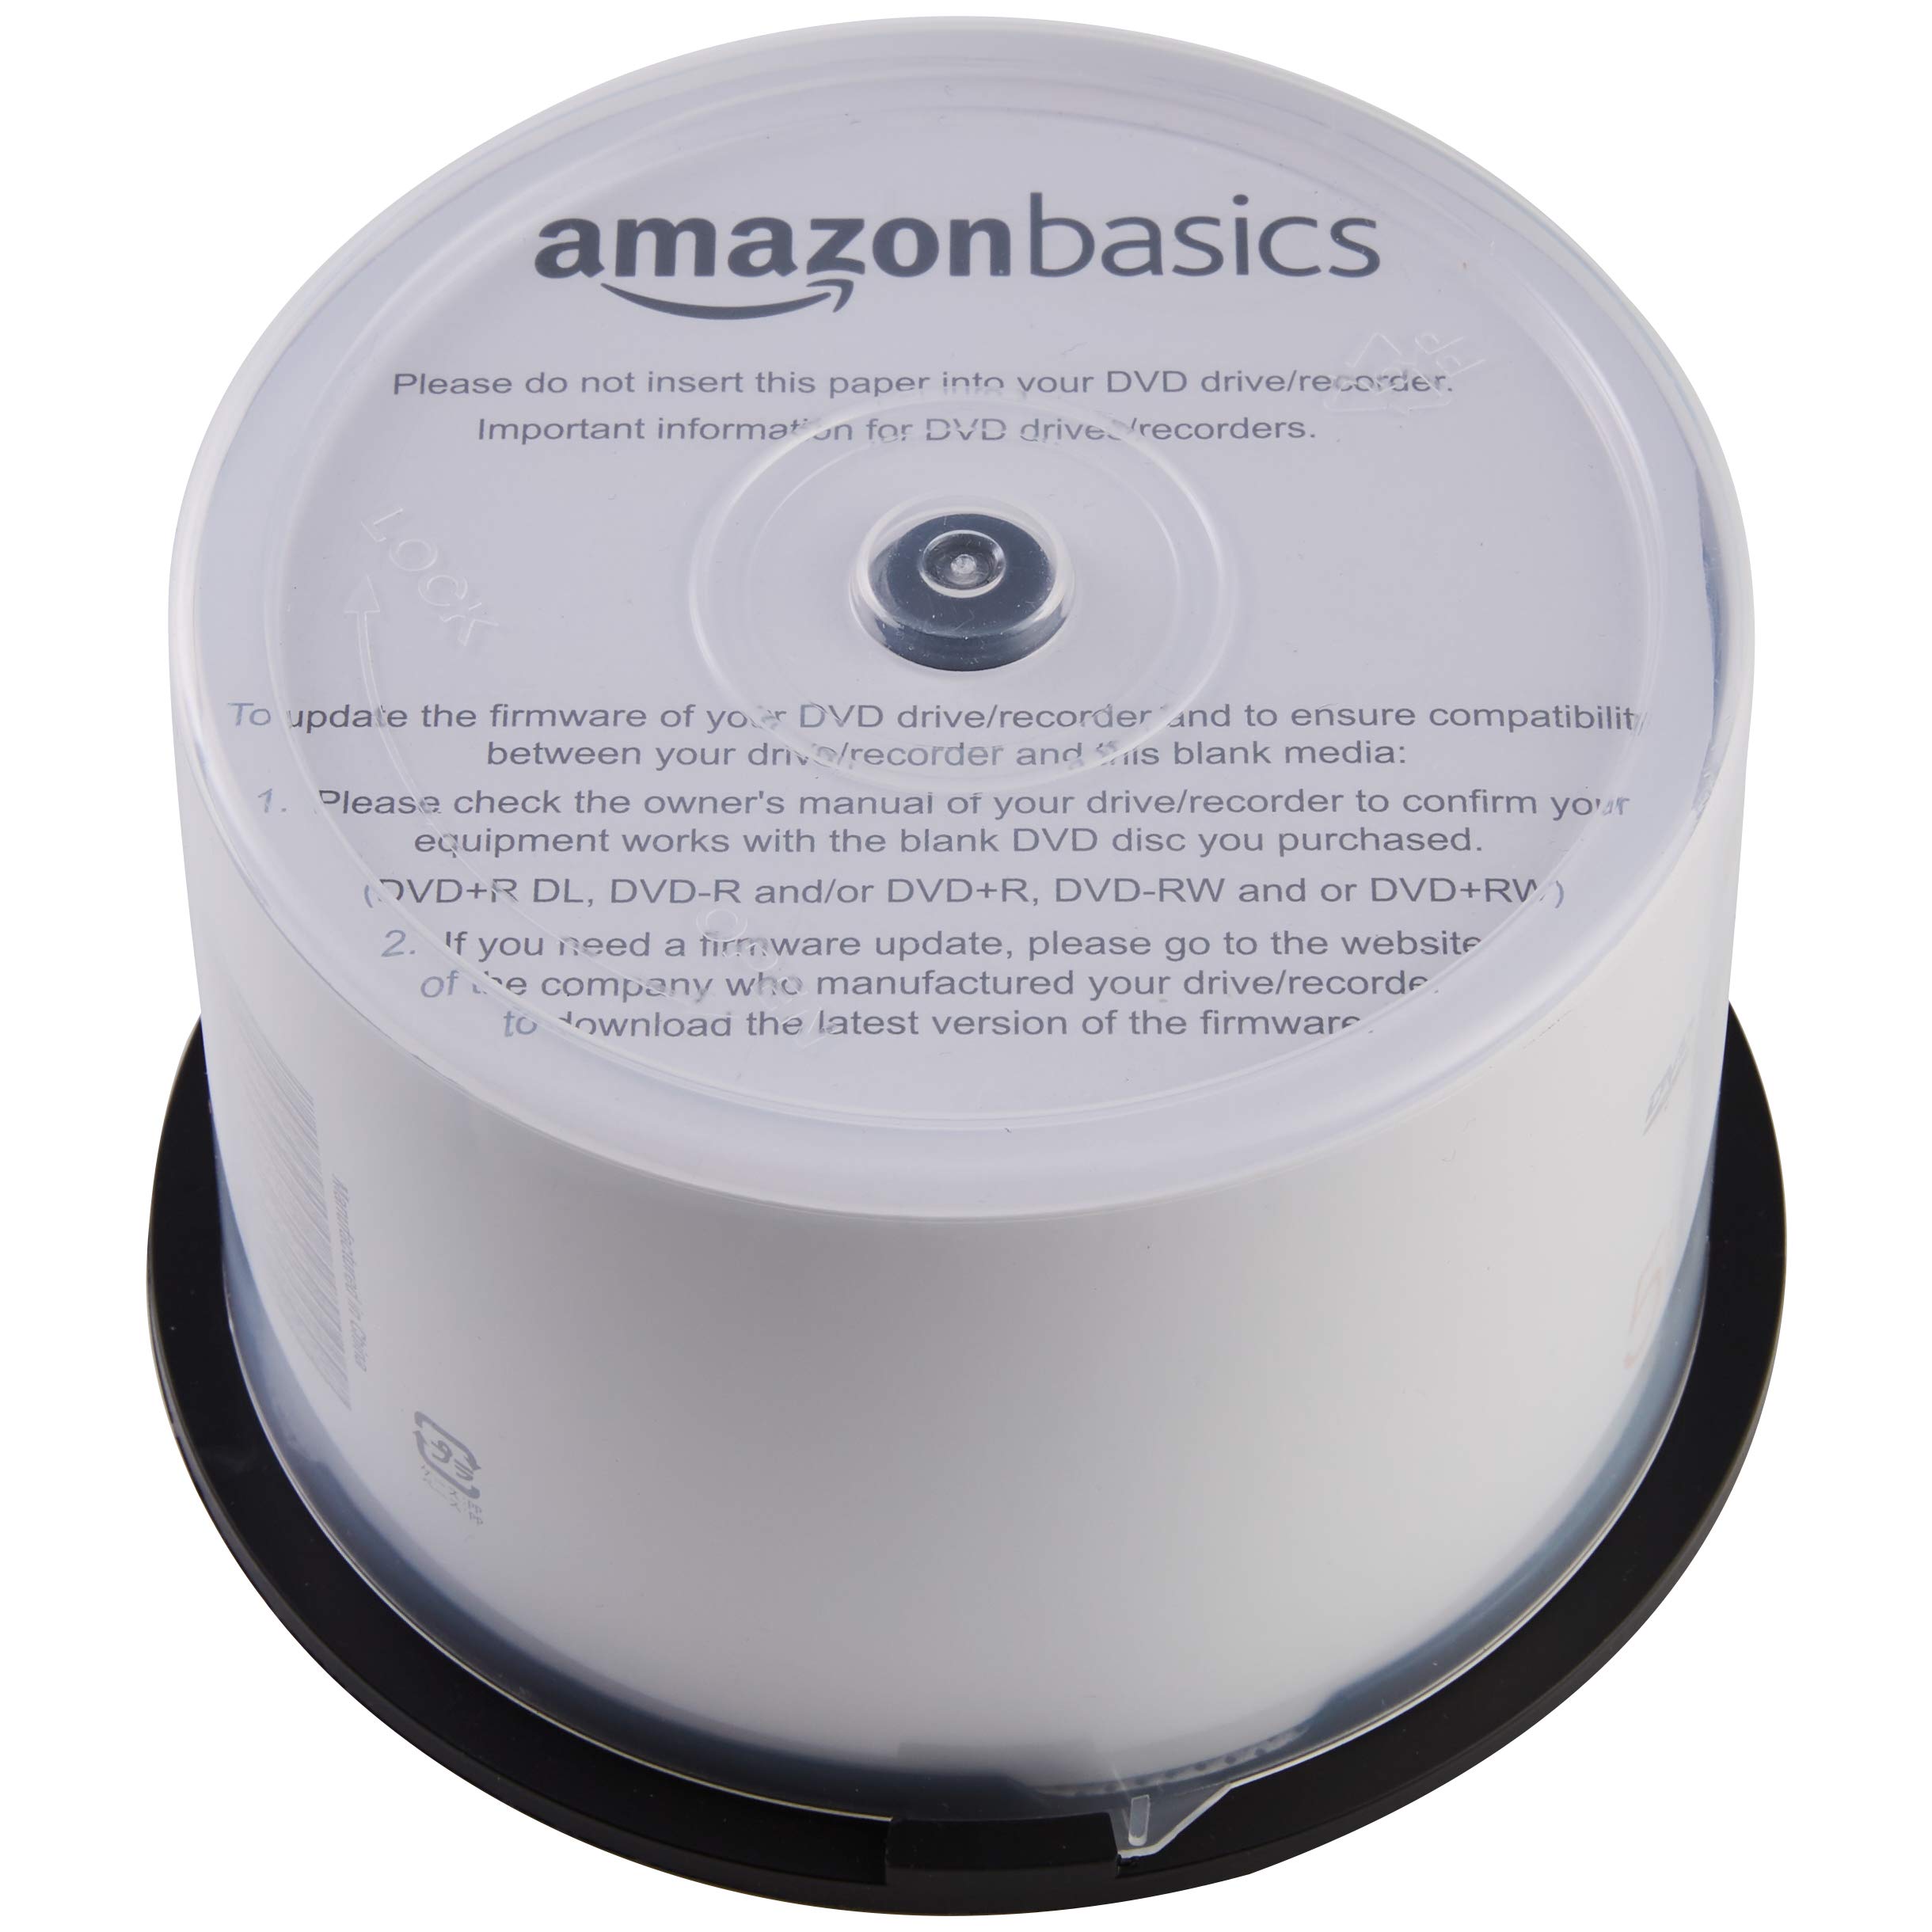 Amazon Basics 4.7 GB blank 16x DVD+R - 50 Pack Spindle